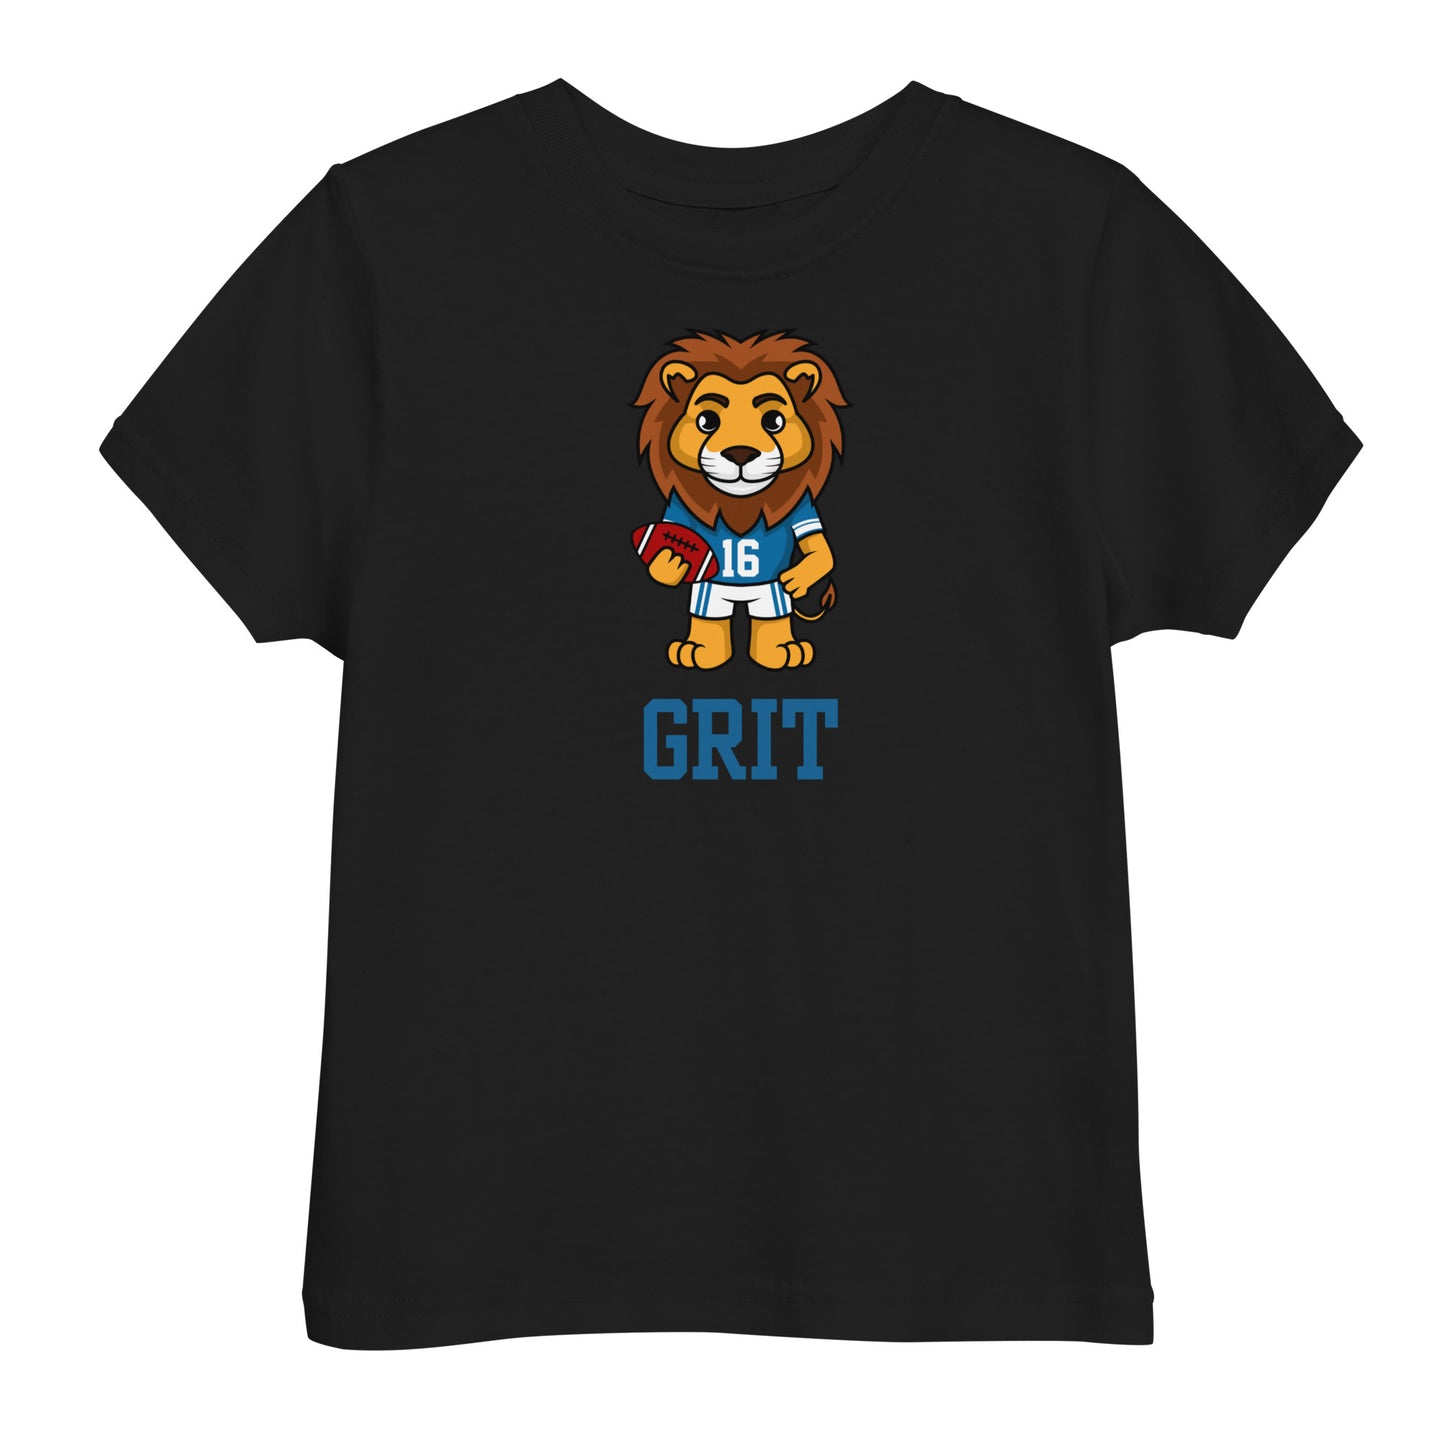 Grit Toddler jersey t-shirt